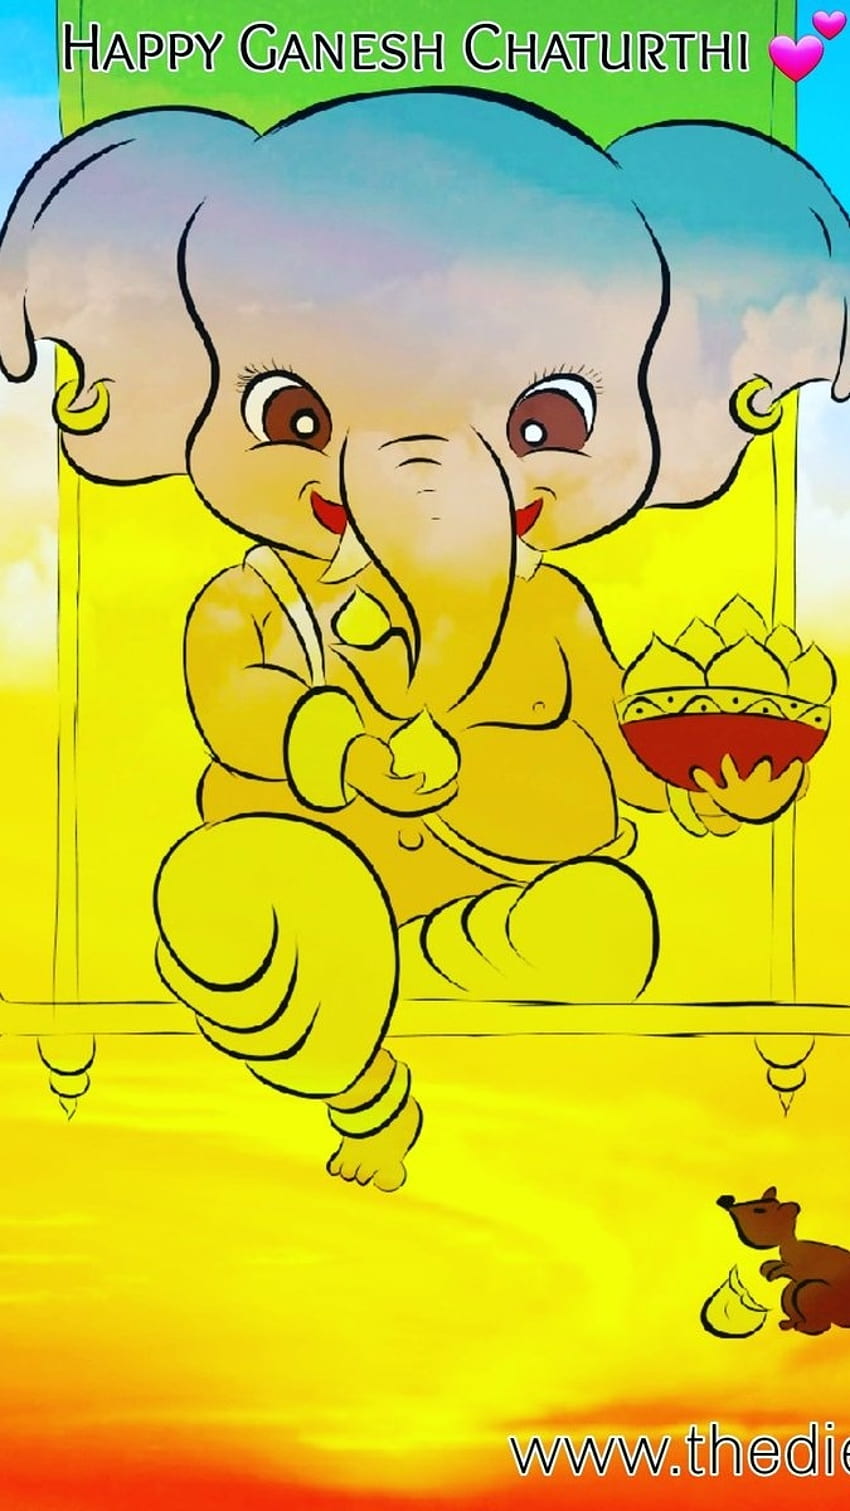 Ganesha drawing / Ganesh chaturthi Indian festival drawing / Lord ganpati  bappa painting - YouTube